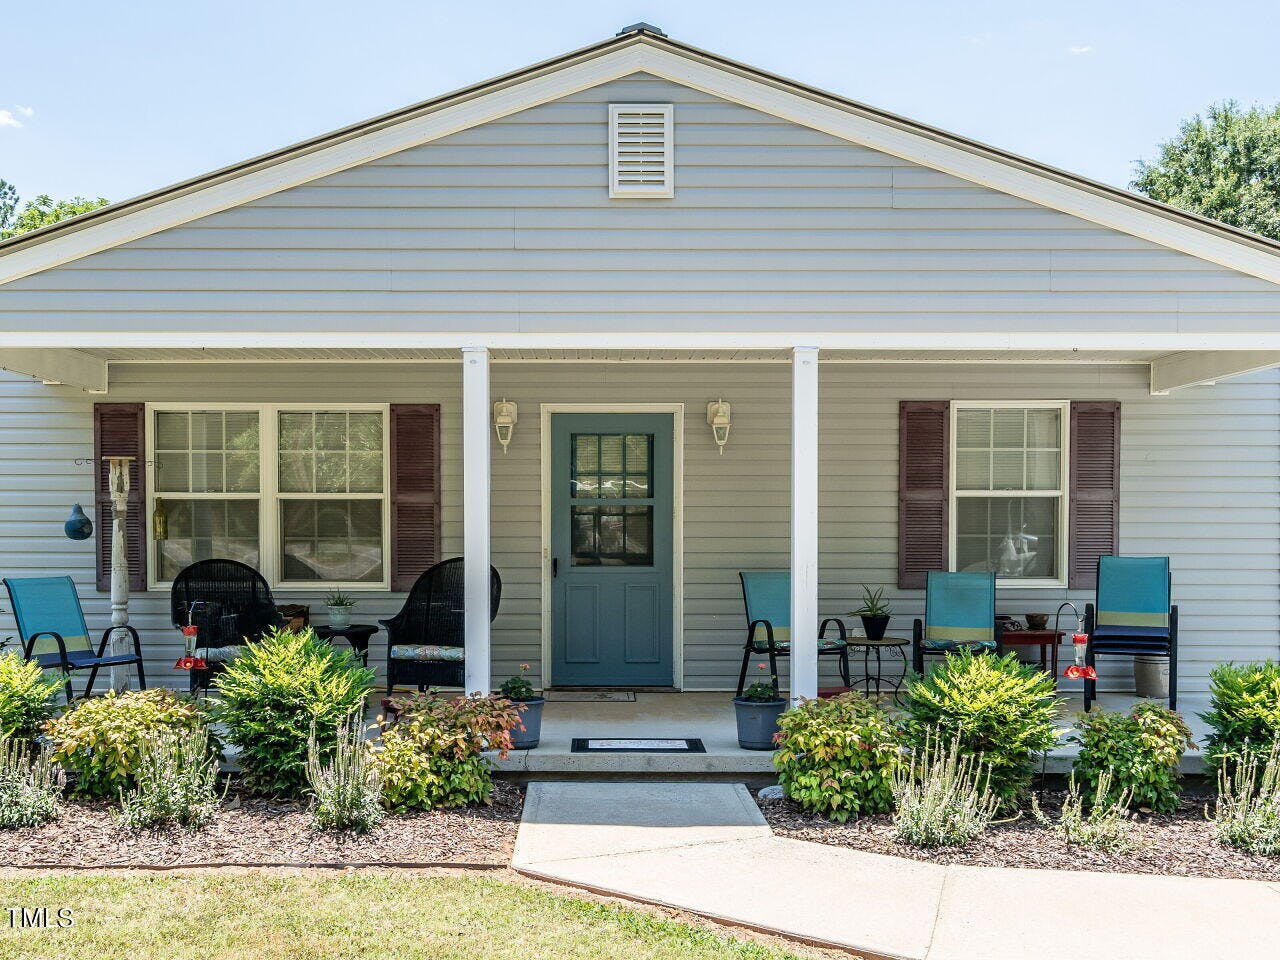 003-1280x960-front-porch